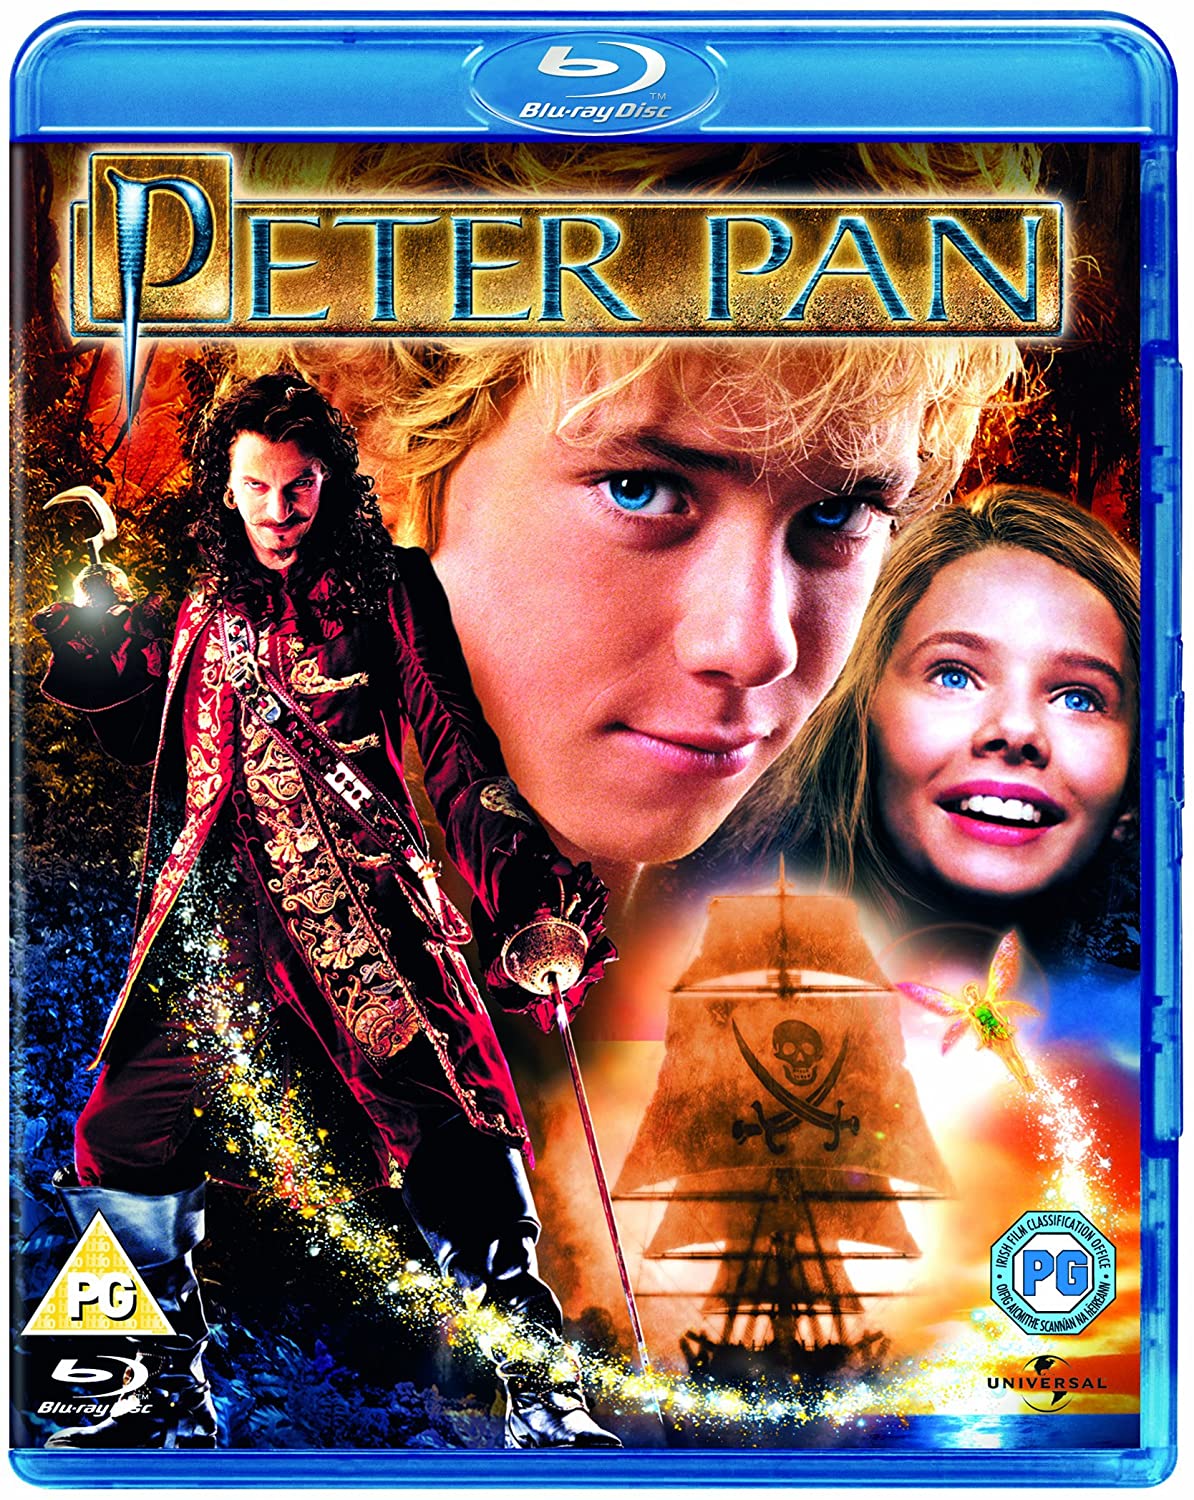 Stiahni si HD Filmy Petr Pan / Peter Pan (2003)(CZ/EN)[1080p] = CSFD 64%